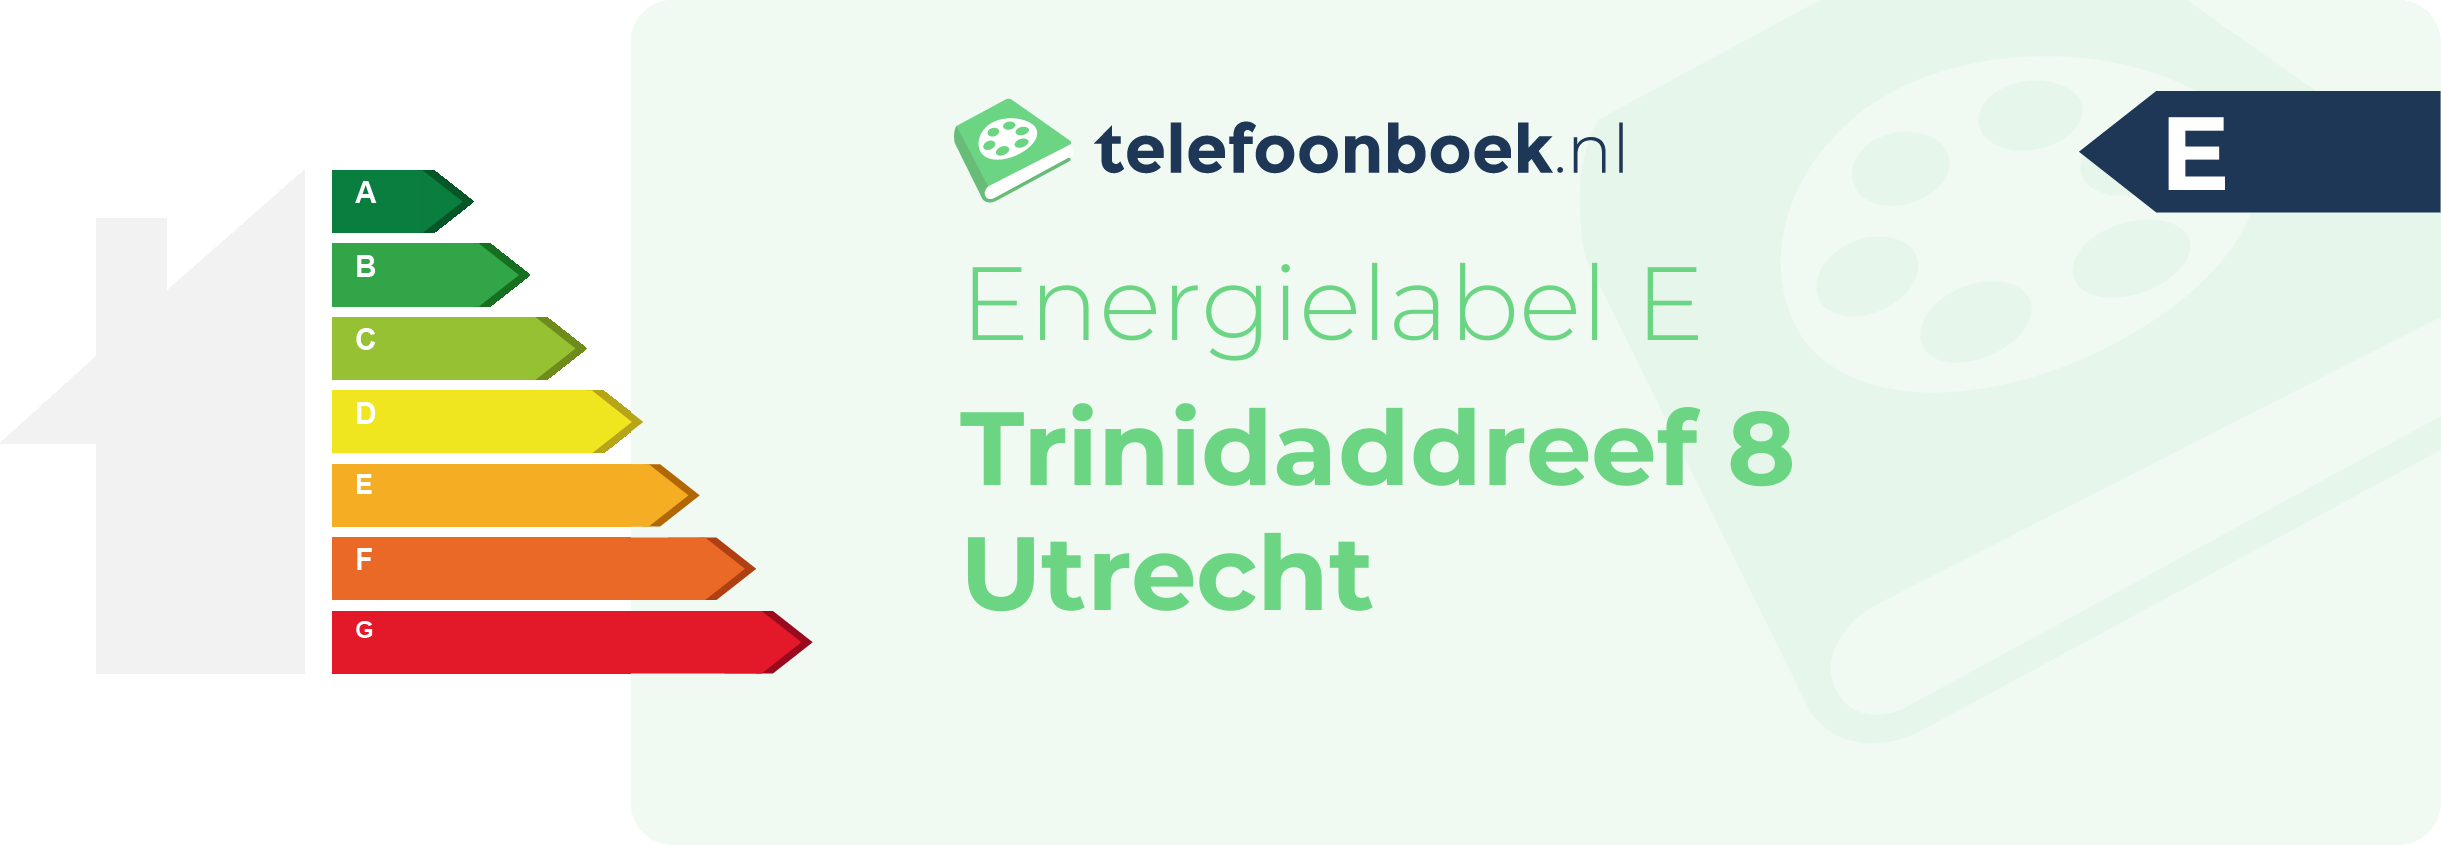 Energielabel Trinidaddreef 8 Utrecht